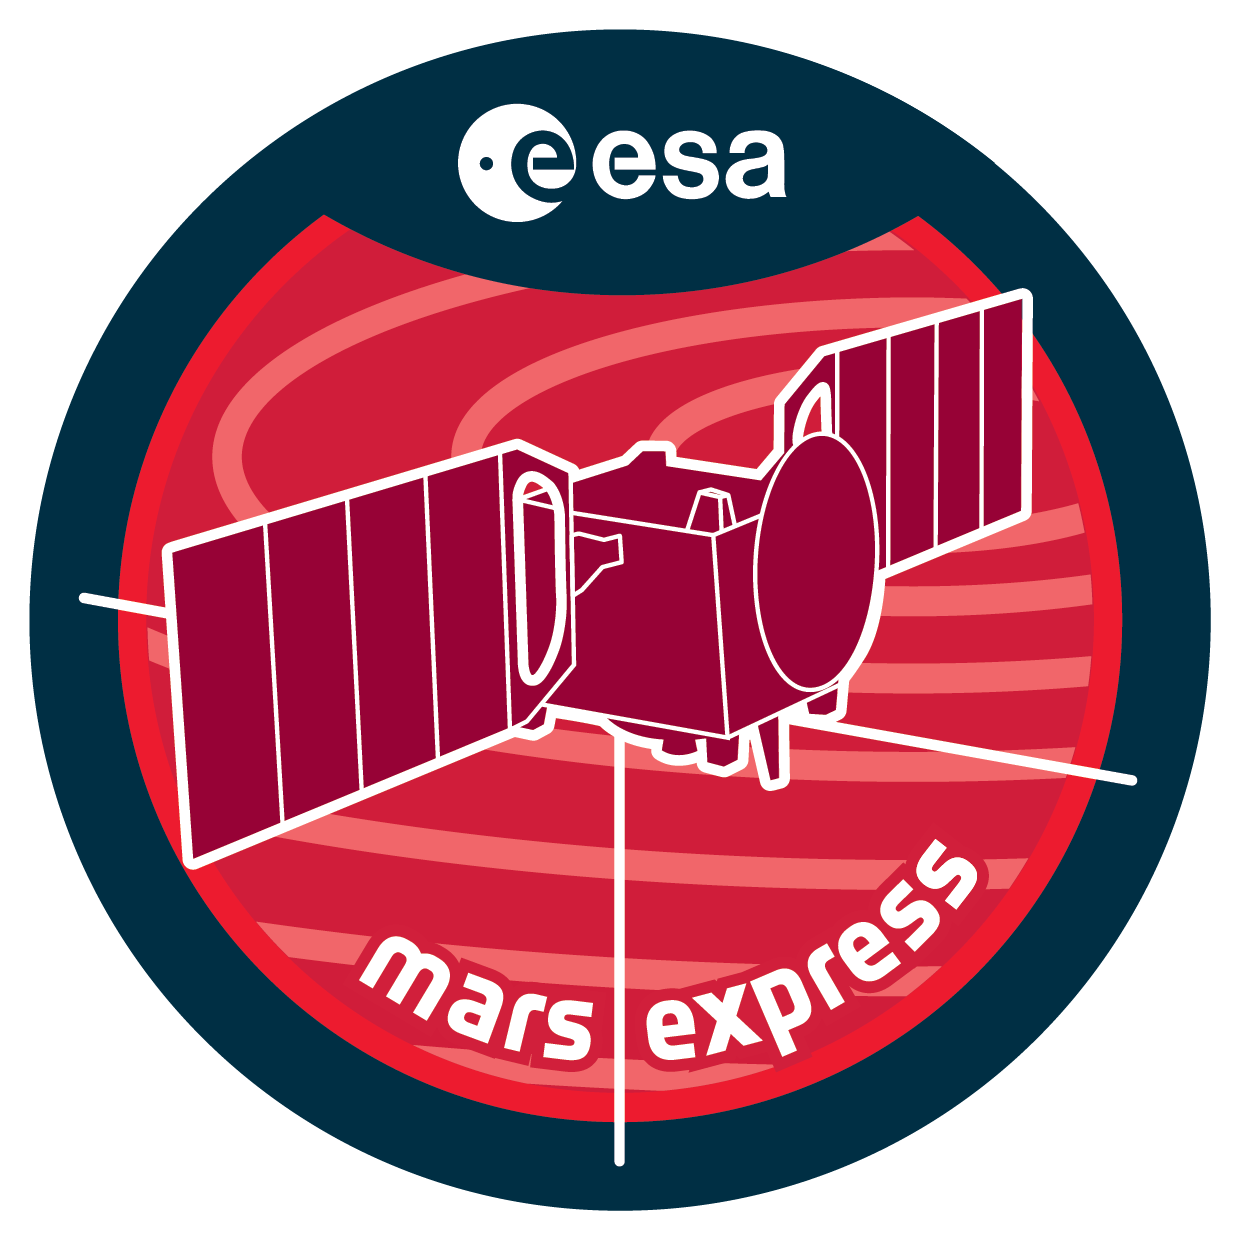 https://www.cosmos.esa.int/documents/522118/522182/Mars-Express_logo.png/c8c45fd1-2029-b071-862b-07356b10957b?t=1614026019591